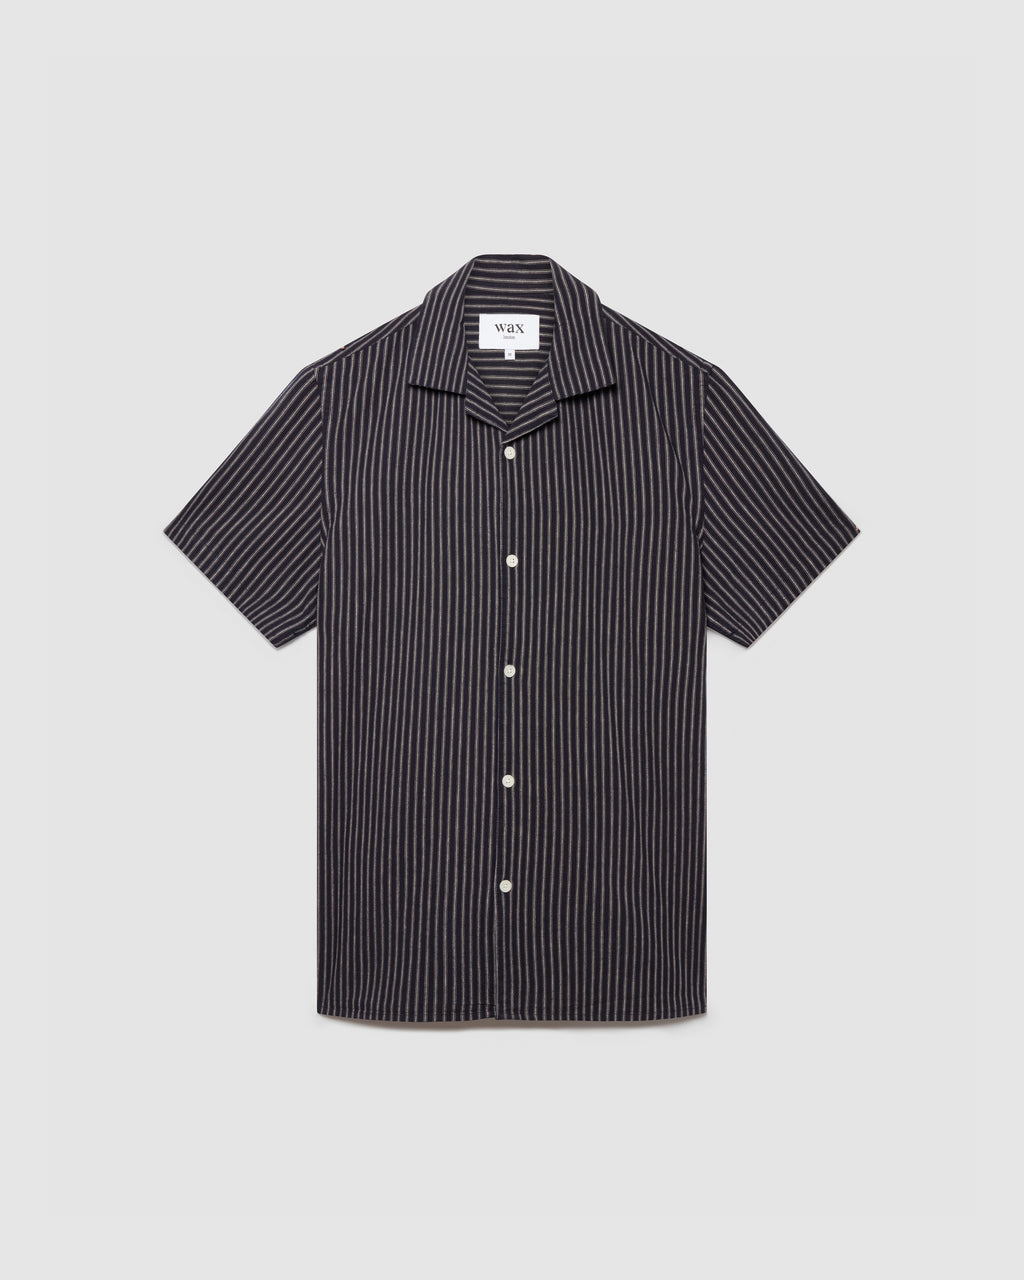 Didcot Shirt Navy Stripe | Wax London